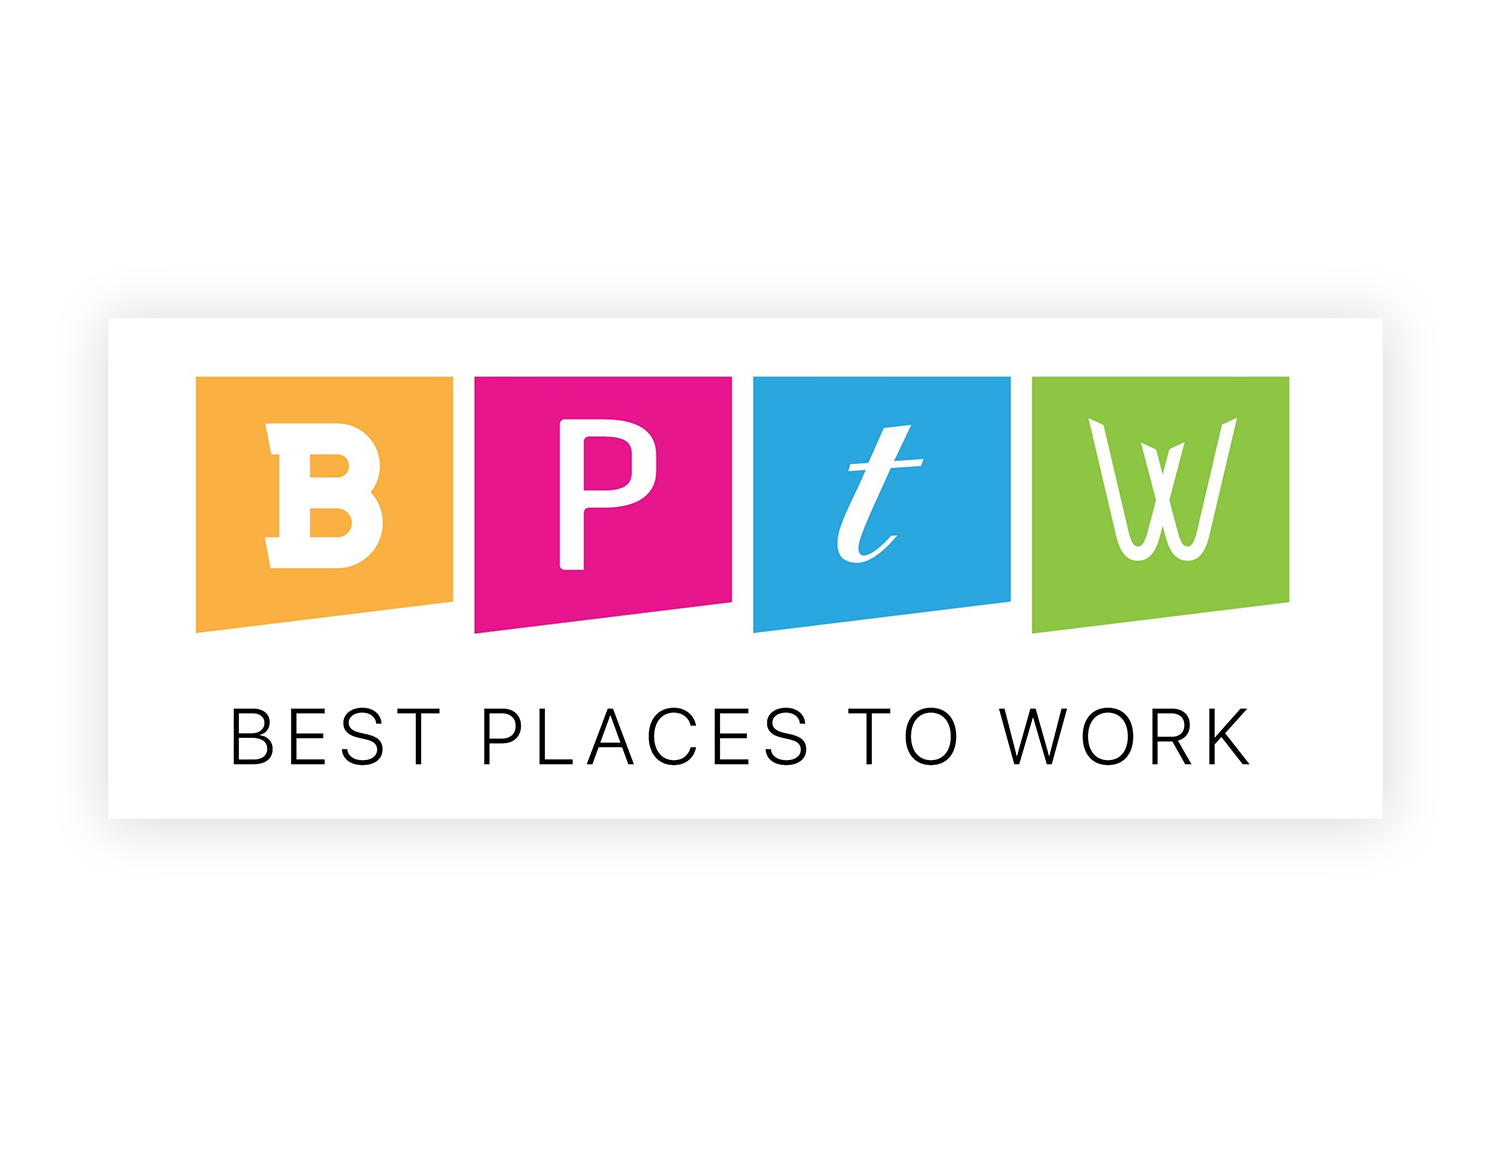 Image - BPTW logo